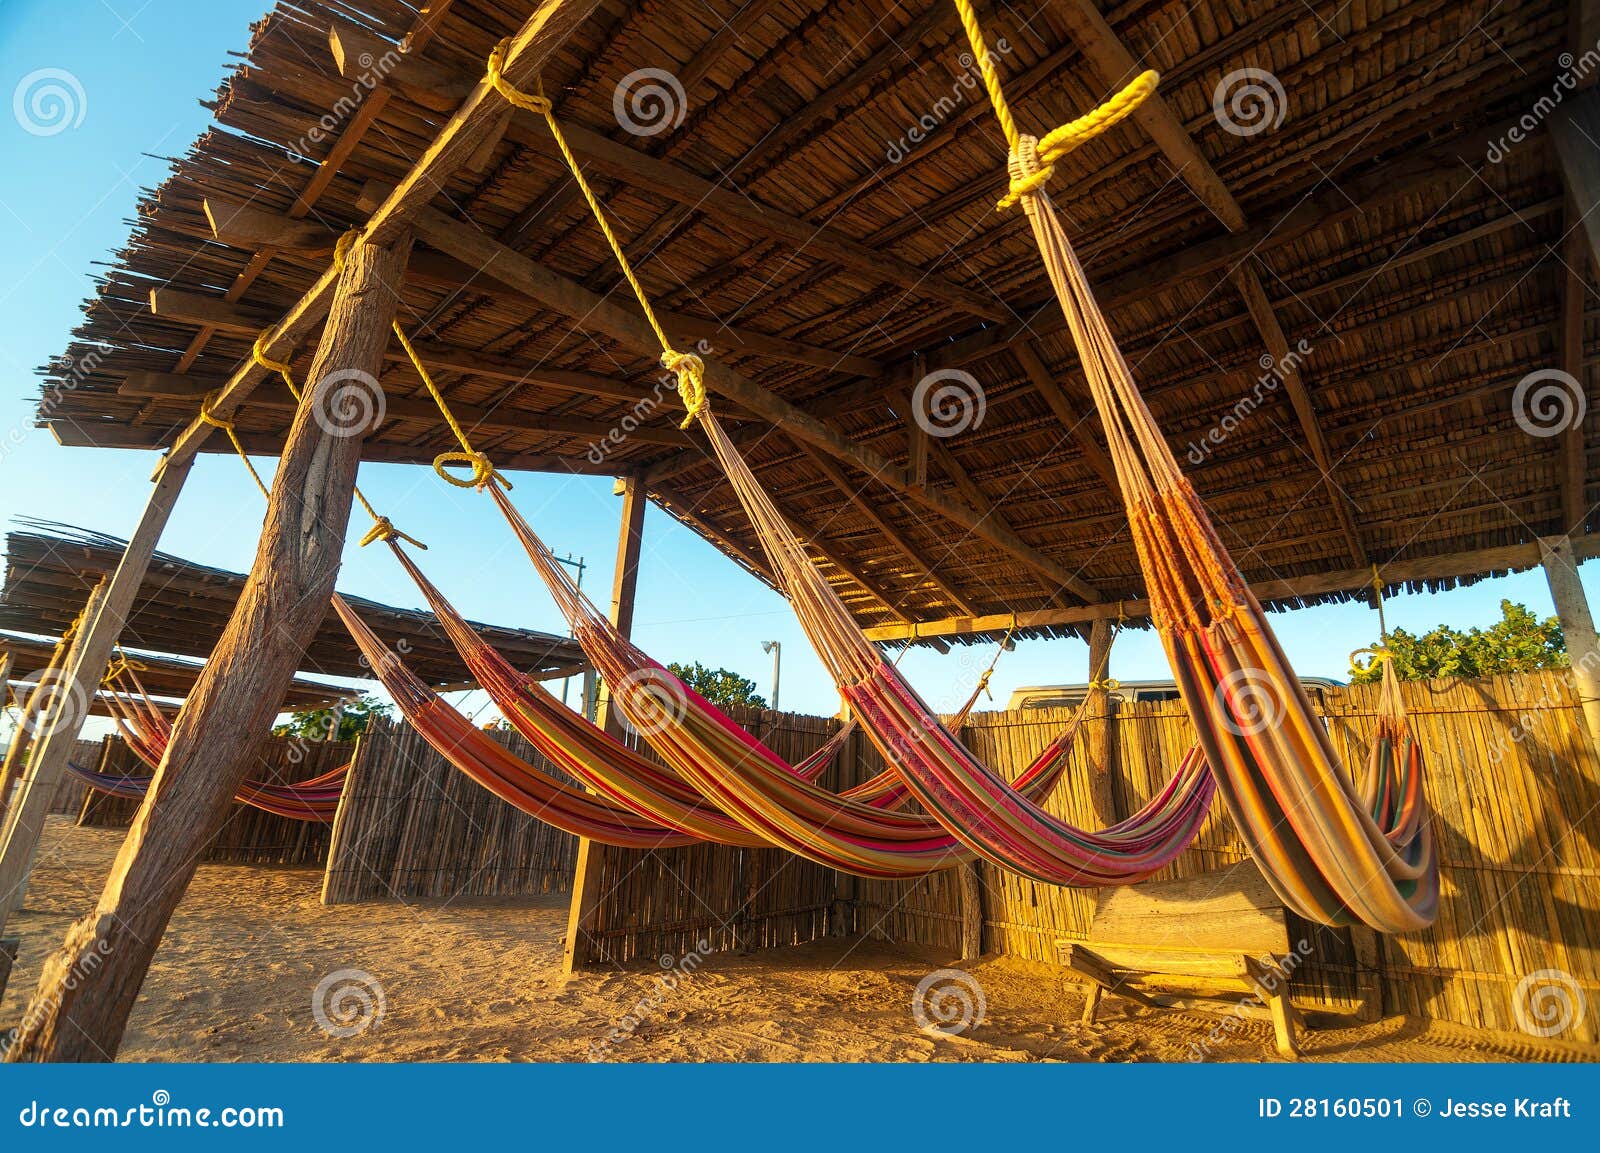 colorful beach hammocks